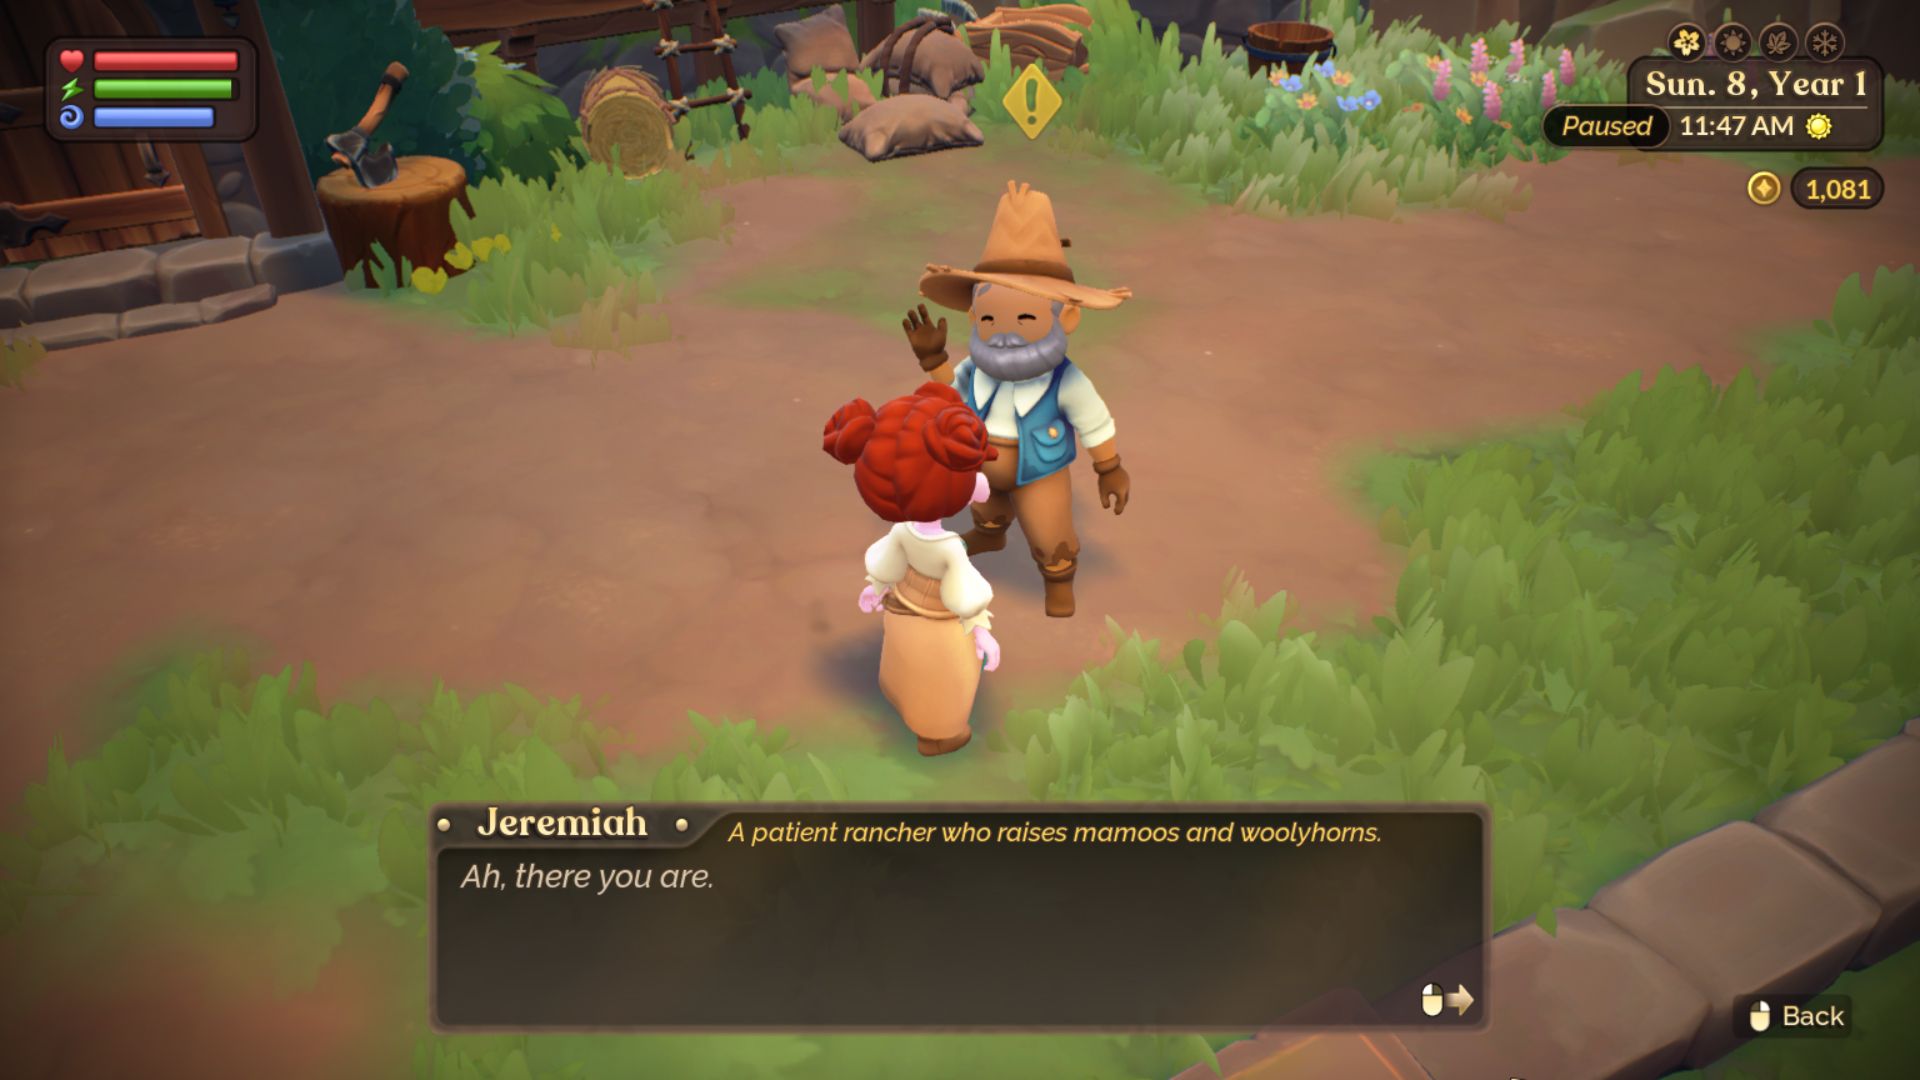 Jeremiah on the Fae farm